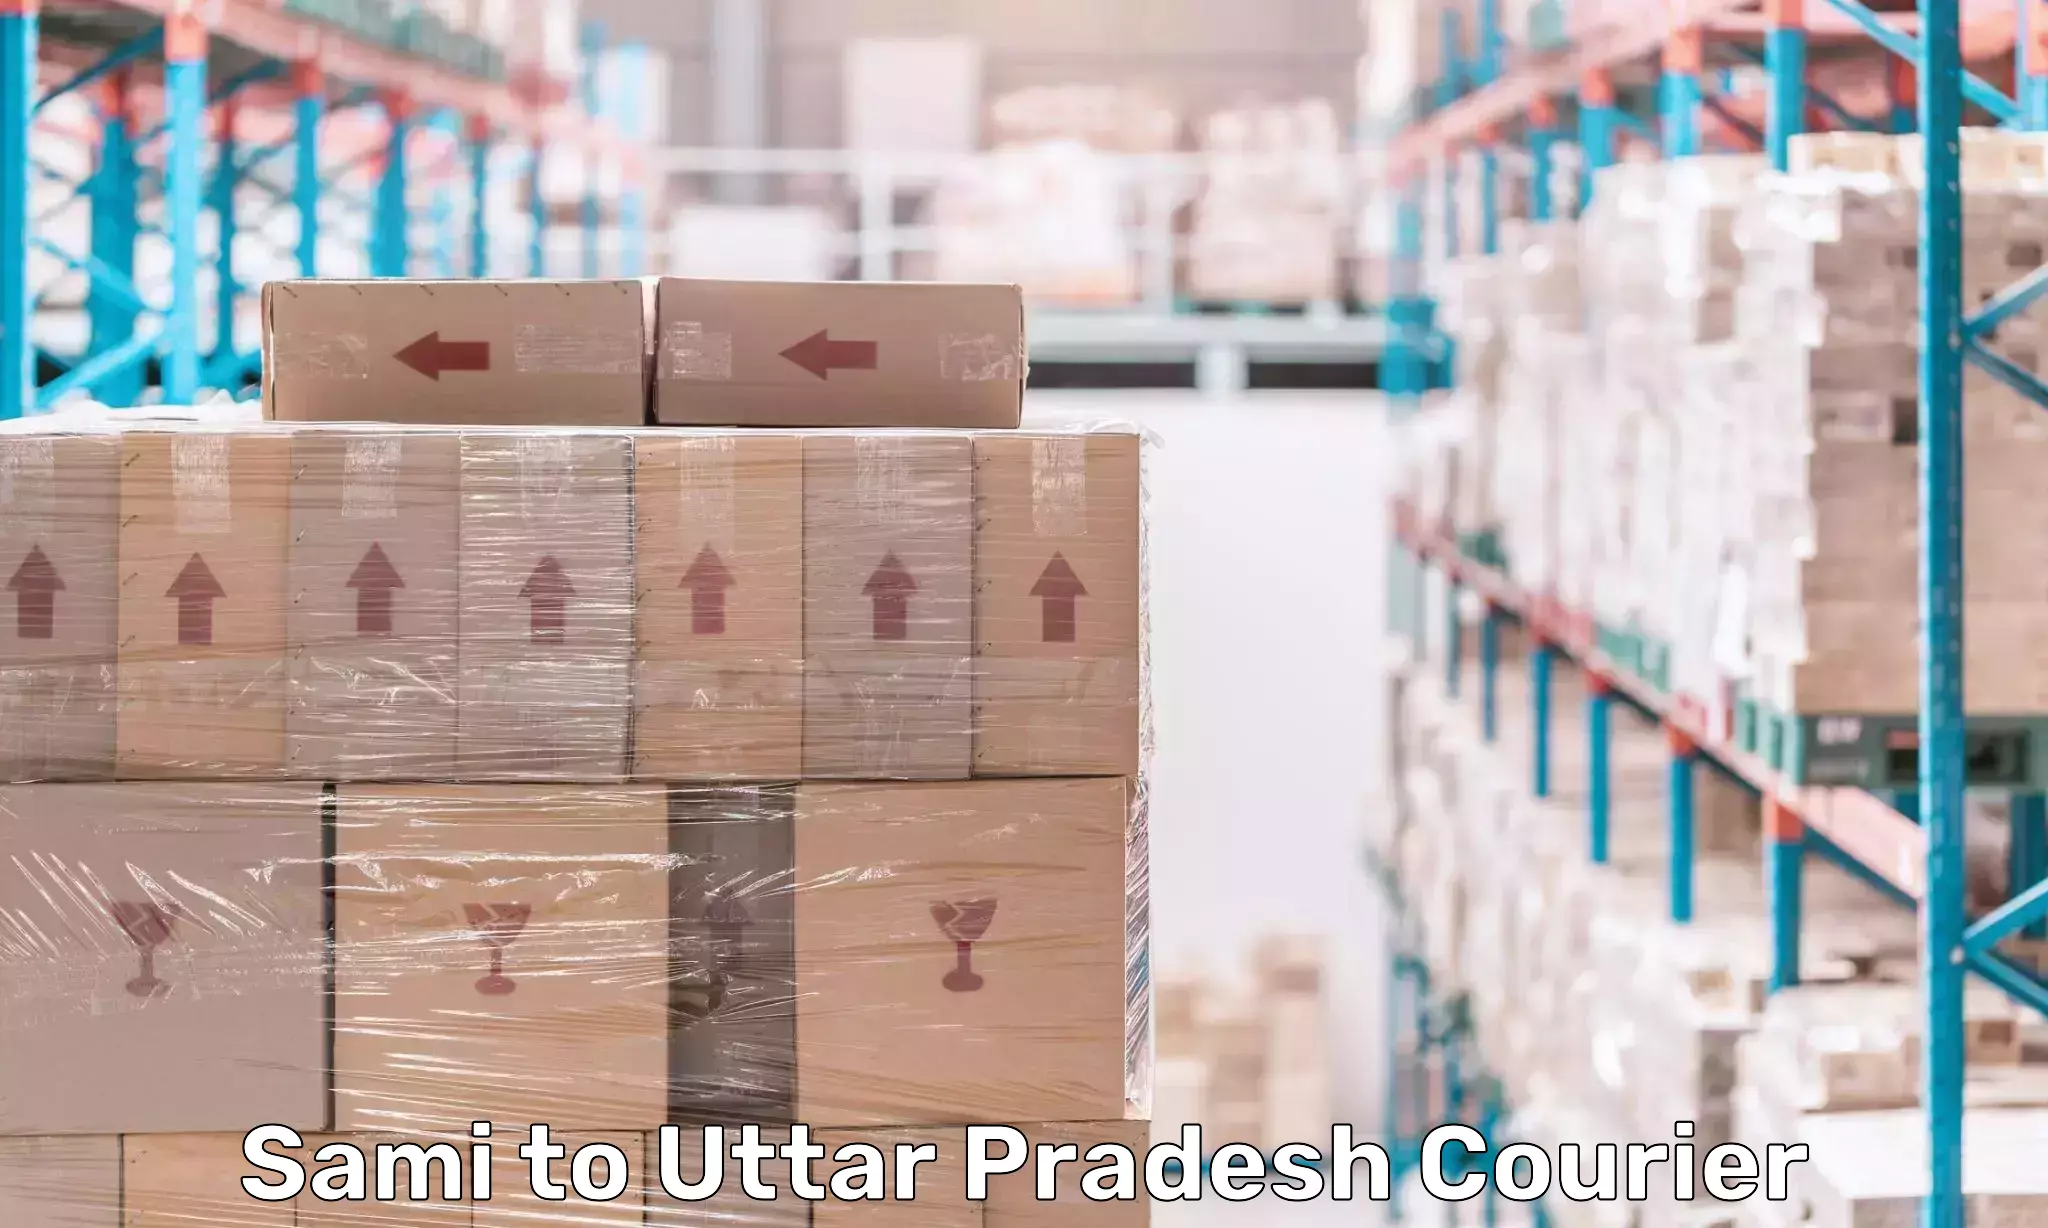 International courier networks Sami to Uttar Pradesh